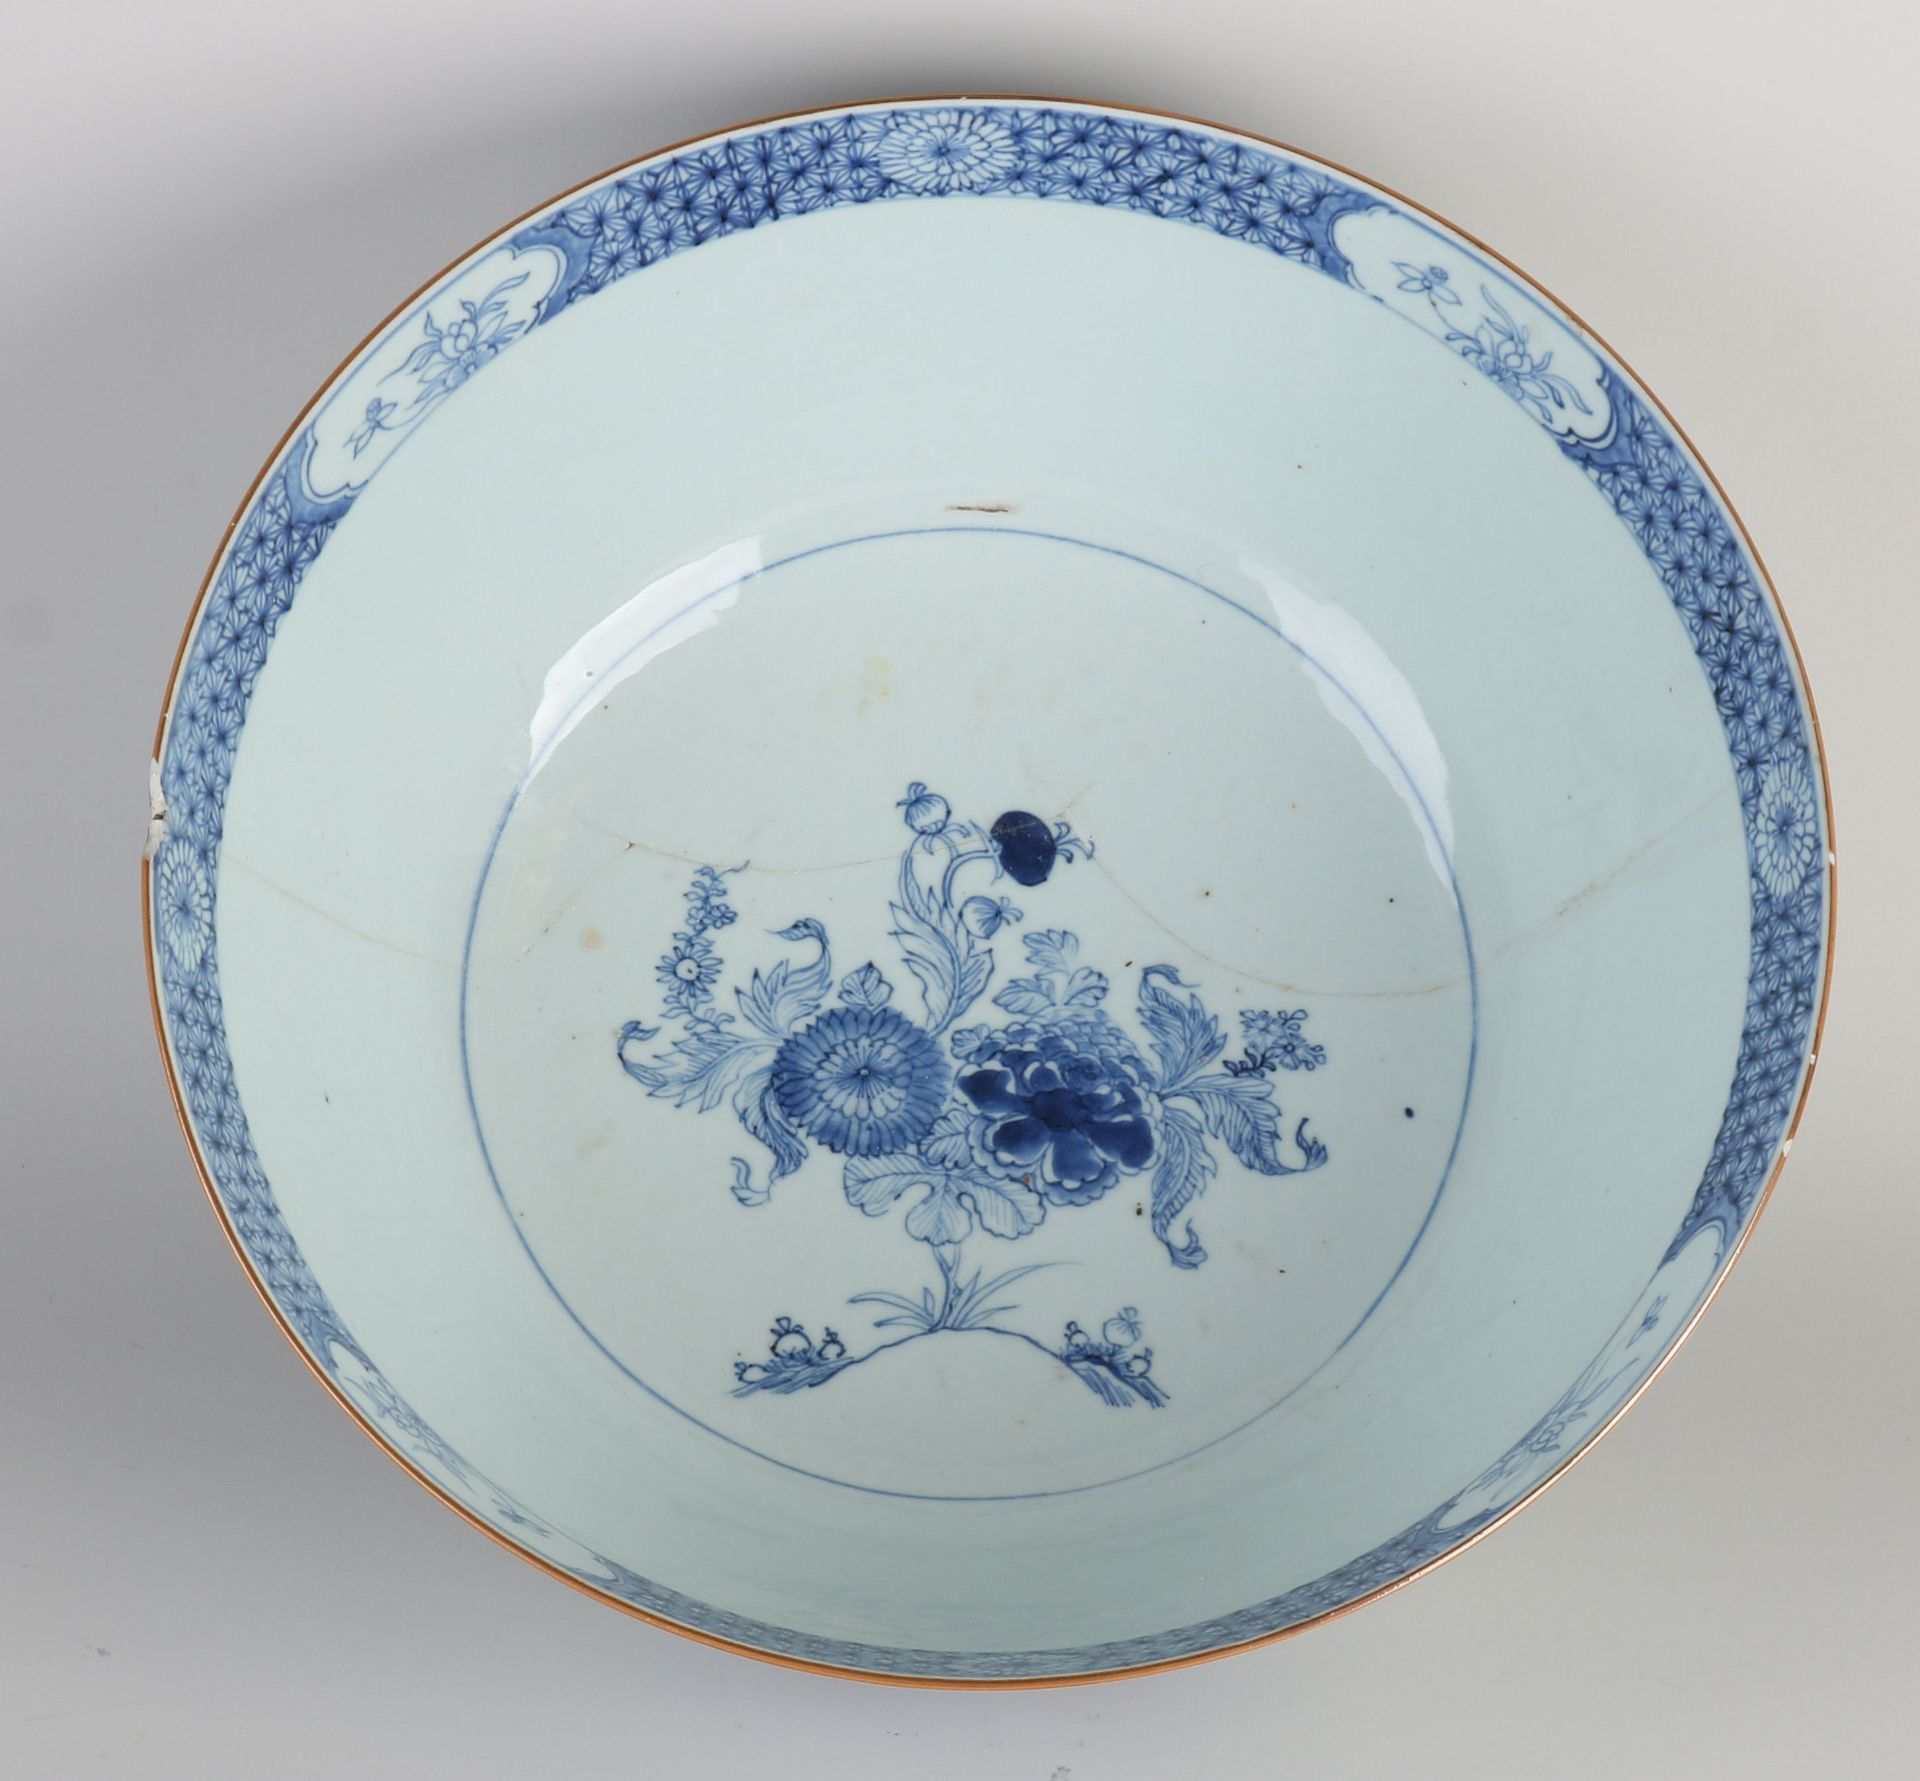 Large 18th century Chinese bowl Ø 33 cm. - Image 2 of 3